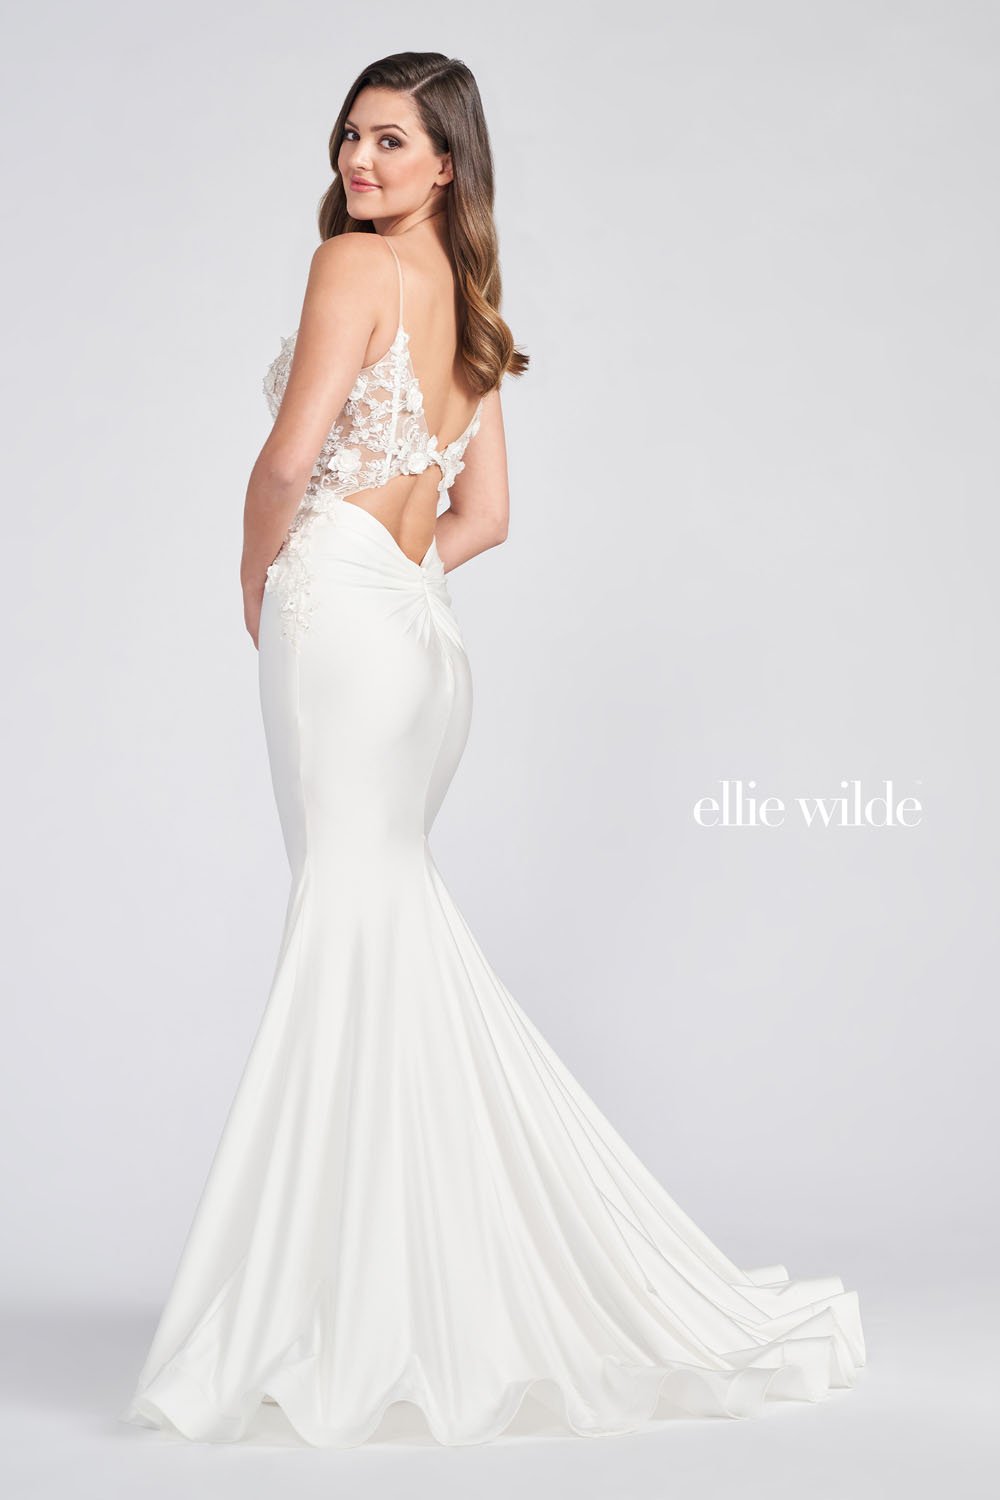 Ellie Wilde Pearl White EW122041 Prom Dress Image.  Pearl White formal dress.